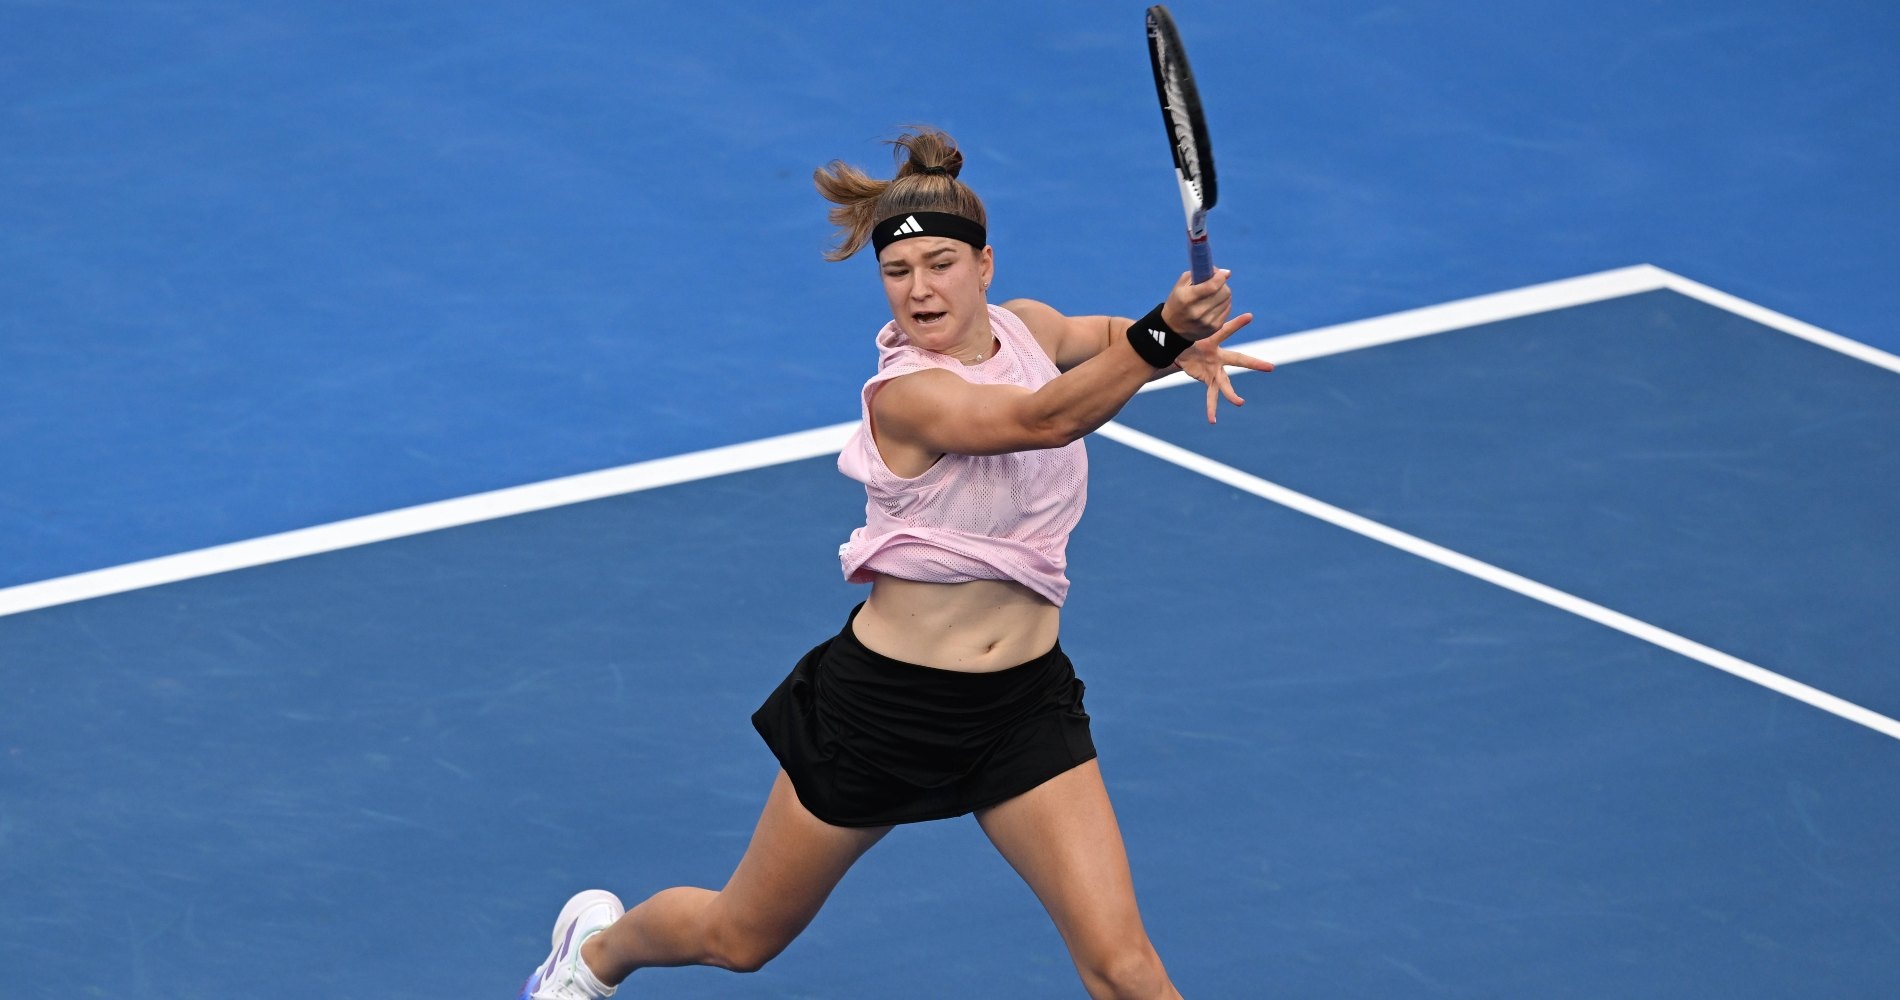 Muchová - Bencic LIVE [22.2.] ▶️ WTA Dubaj 2023 živě